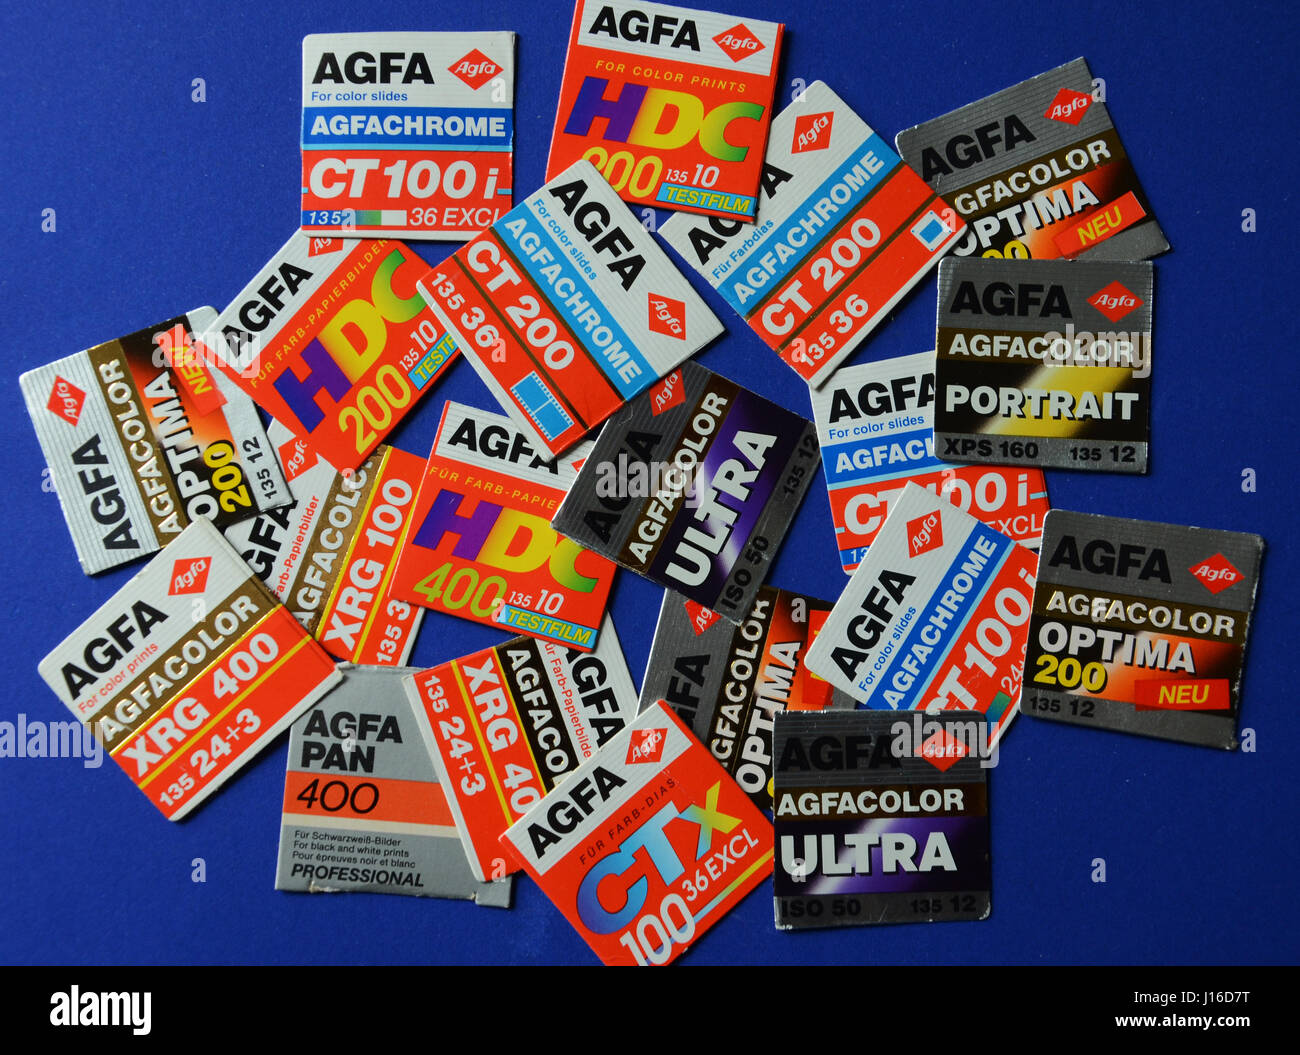 Analogue Agfa film brands Stock Photo